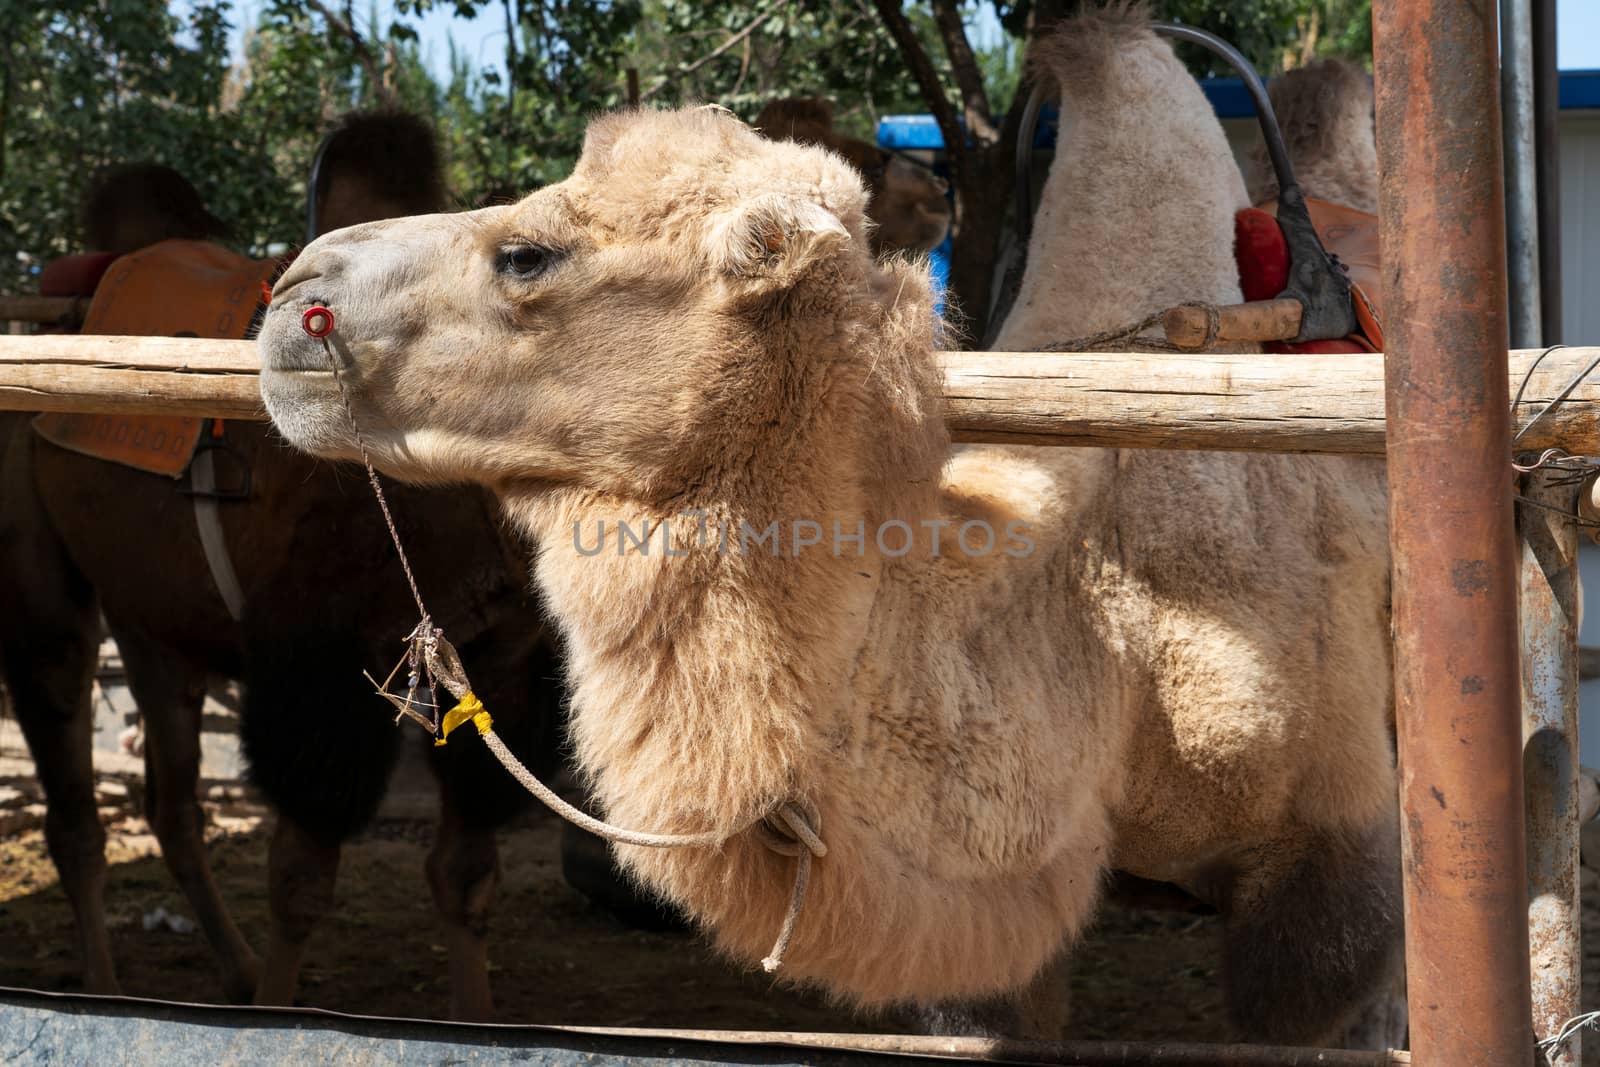 Camels farm, breeding shed in the rural farm. by vinkfan